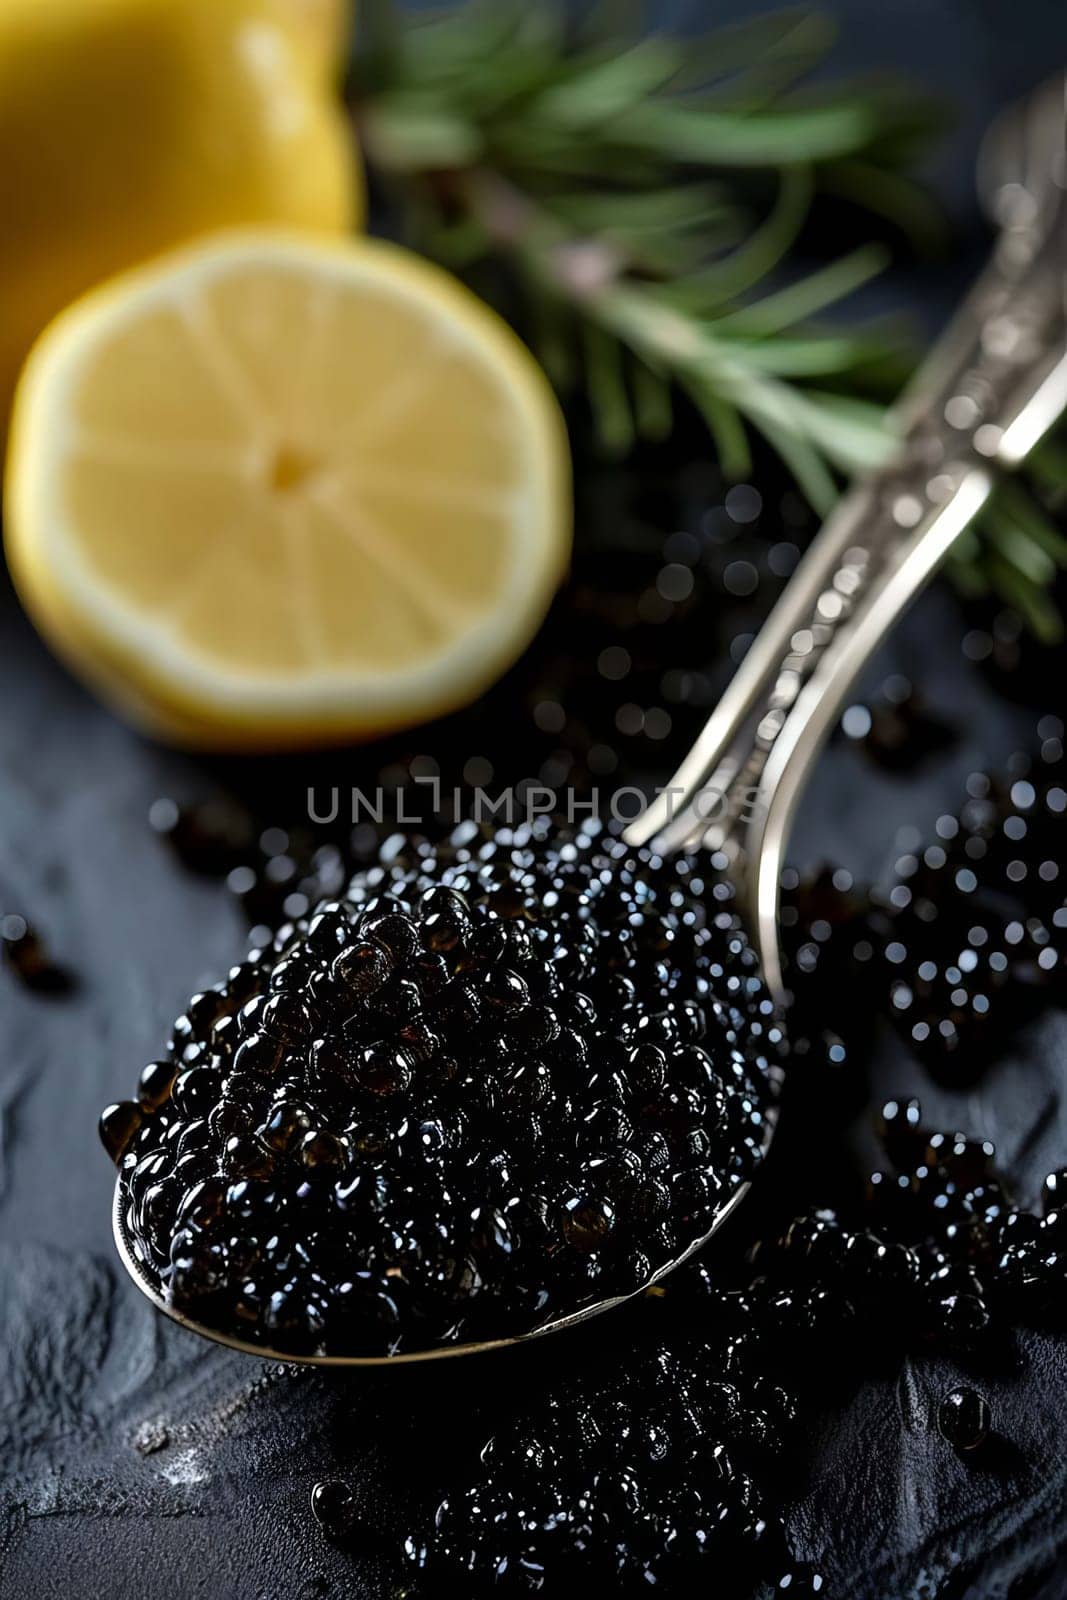 Black caviar and lemon. Selective focus. Food.